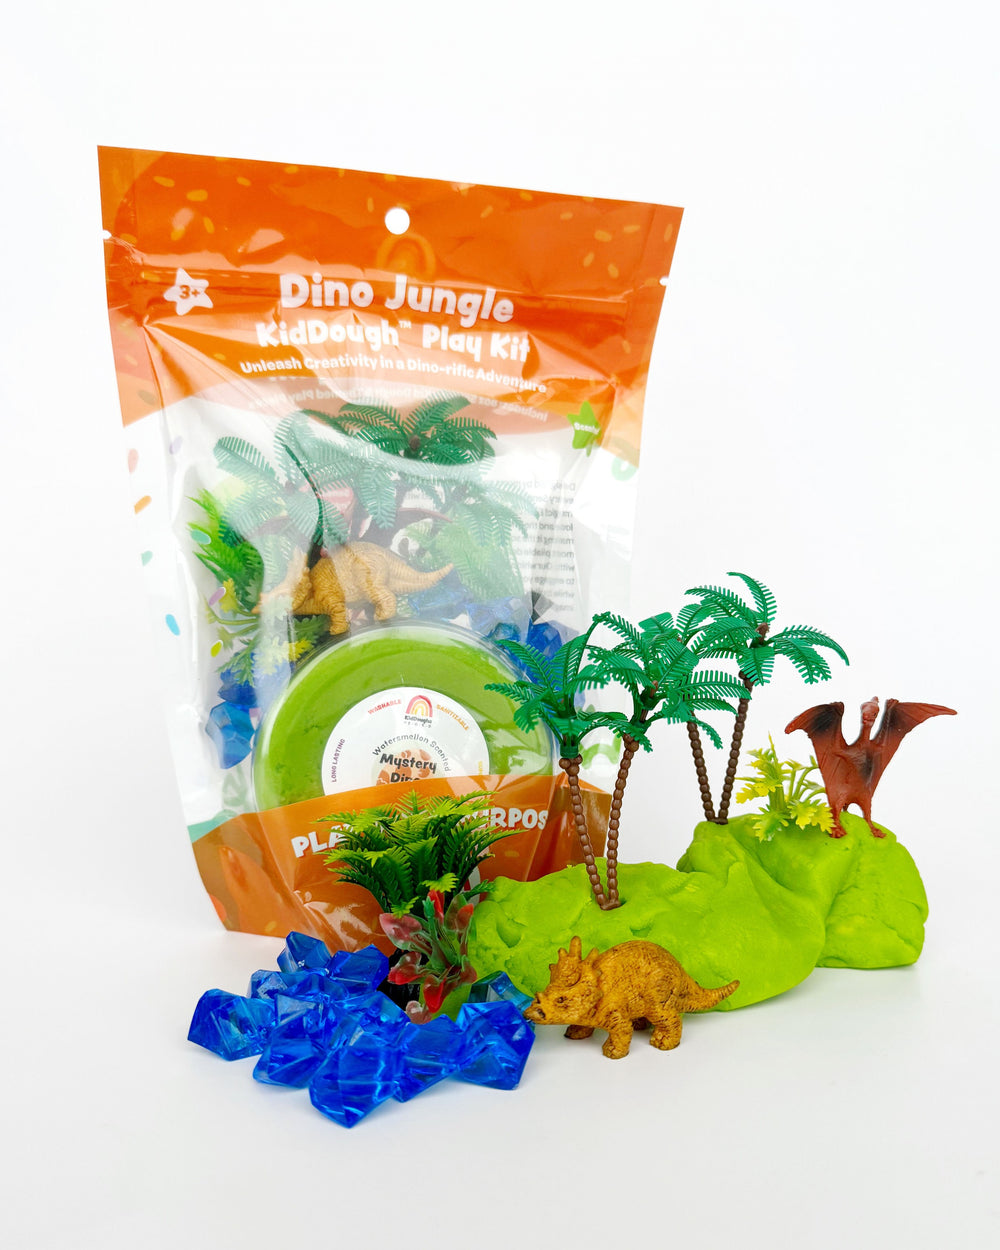 Dino Jungle (Watersmellon) KidDough Play Kit